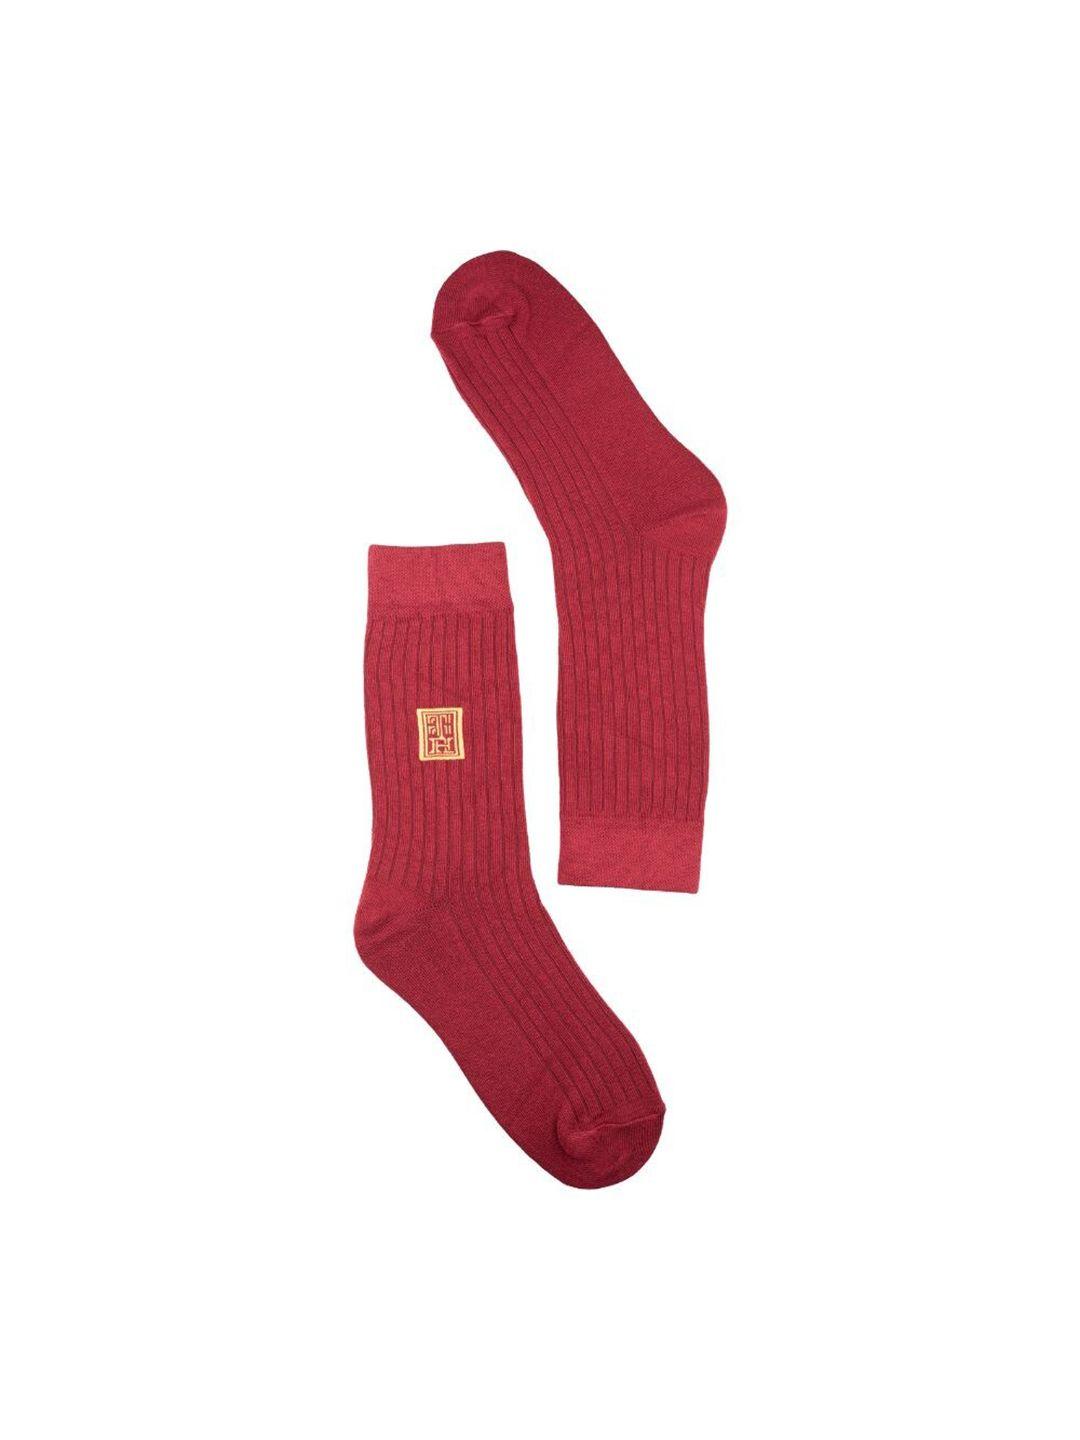 the-tie-hub-men-patterned-cotton-calf-length-socks